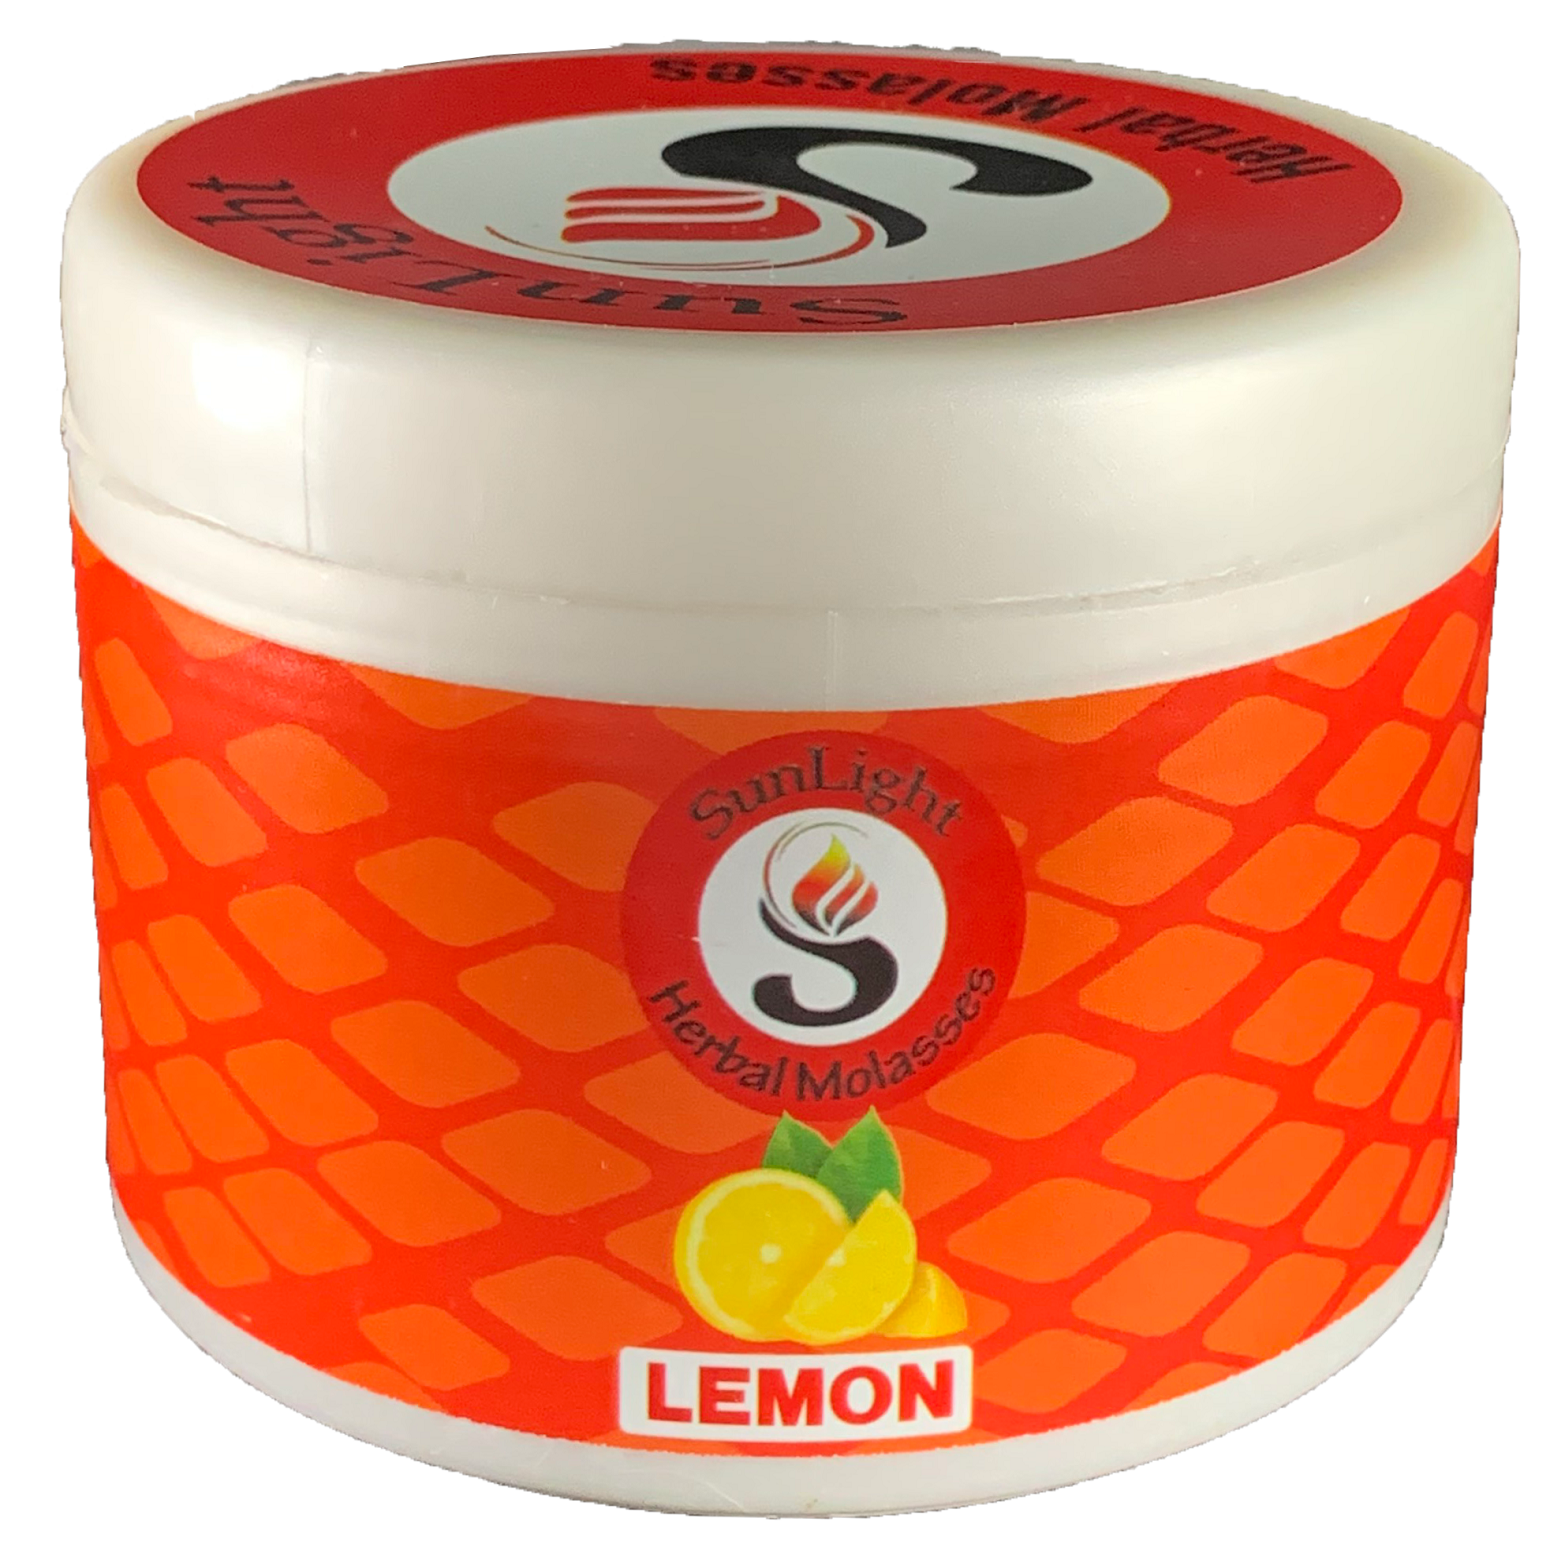 SunLight Non Tobacco 200gm Lemon